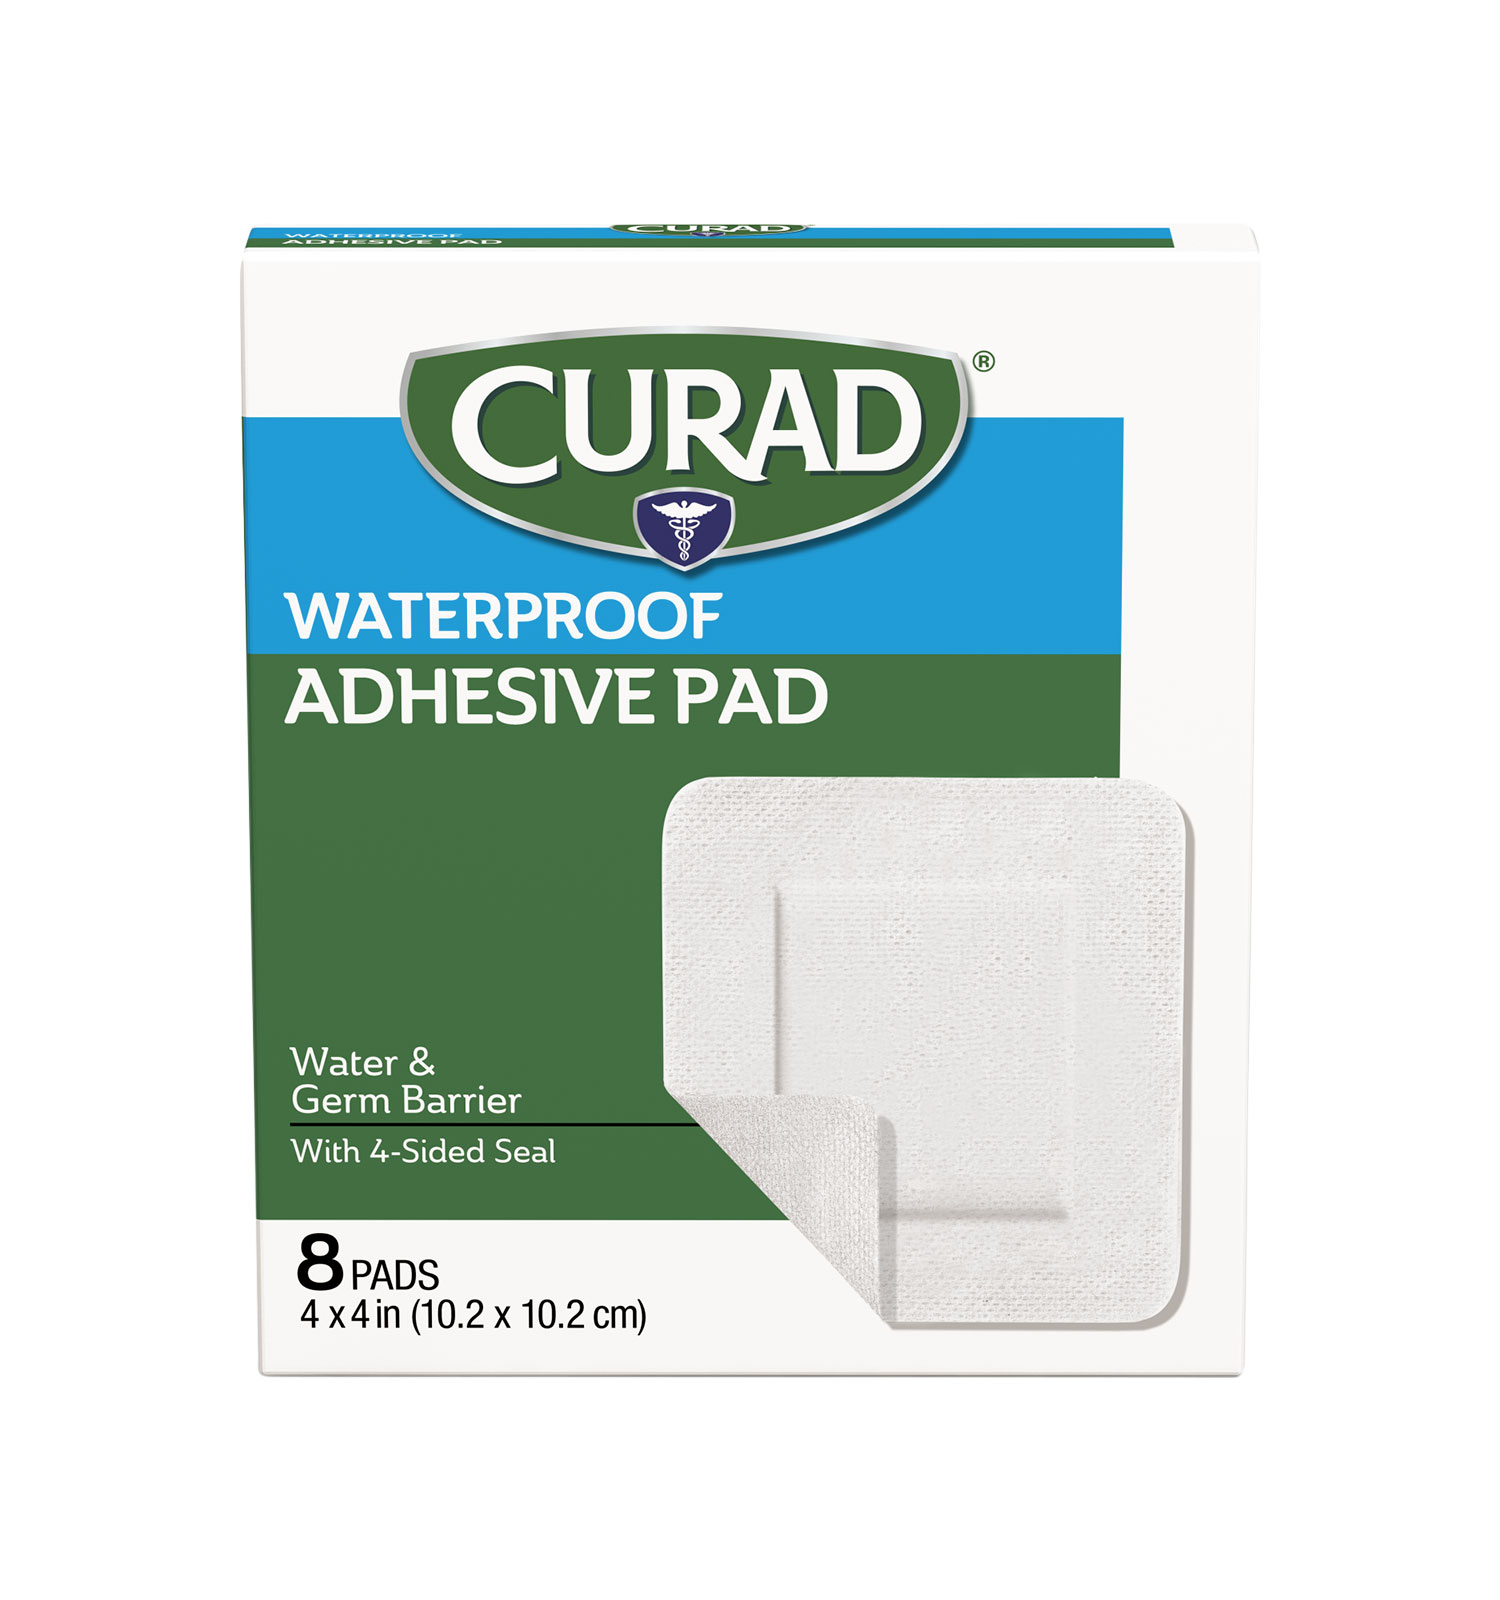 Adhesive pads